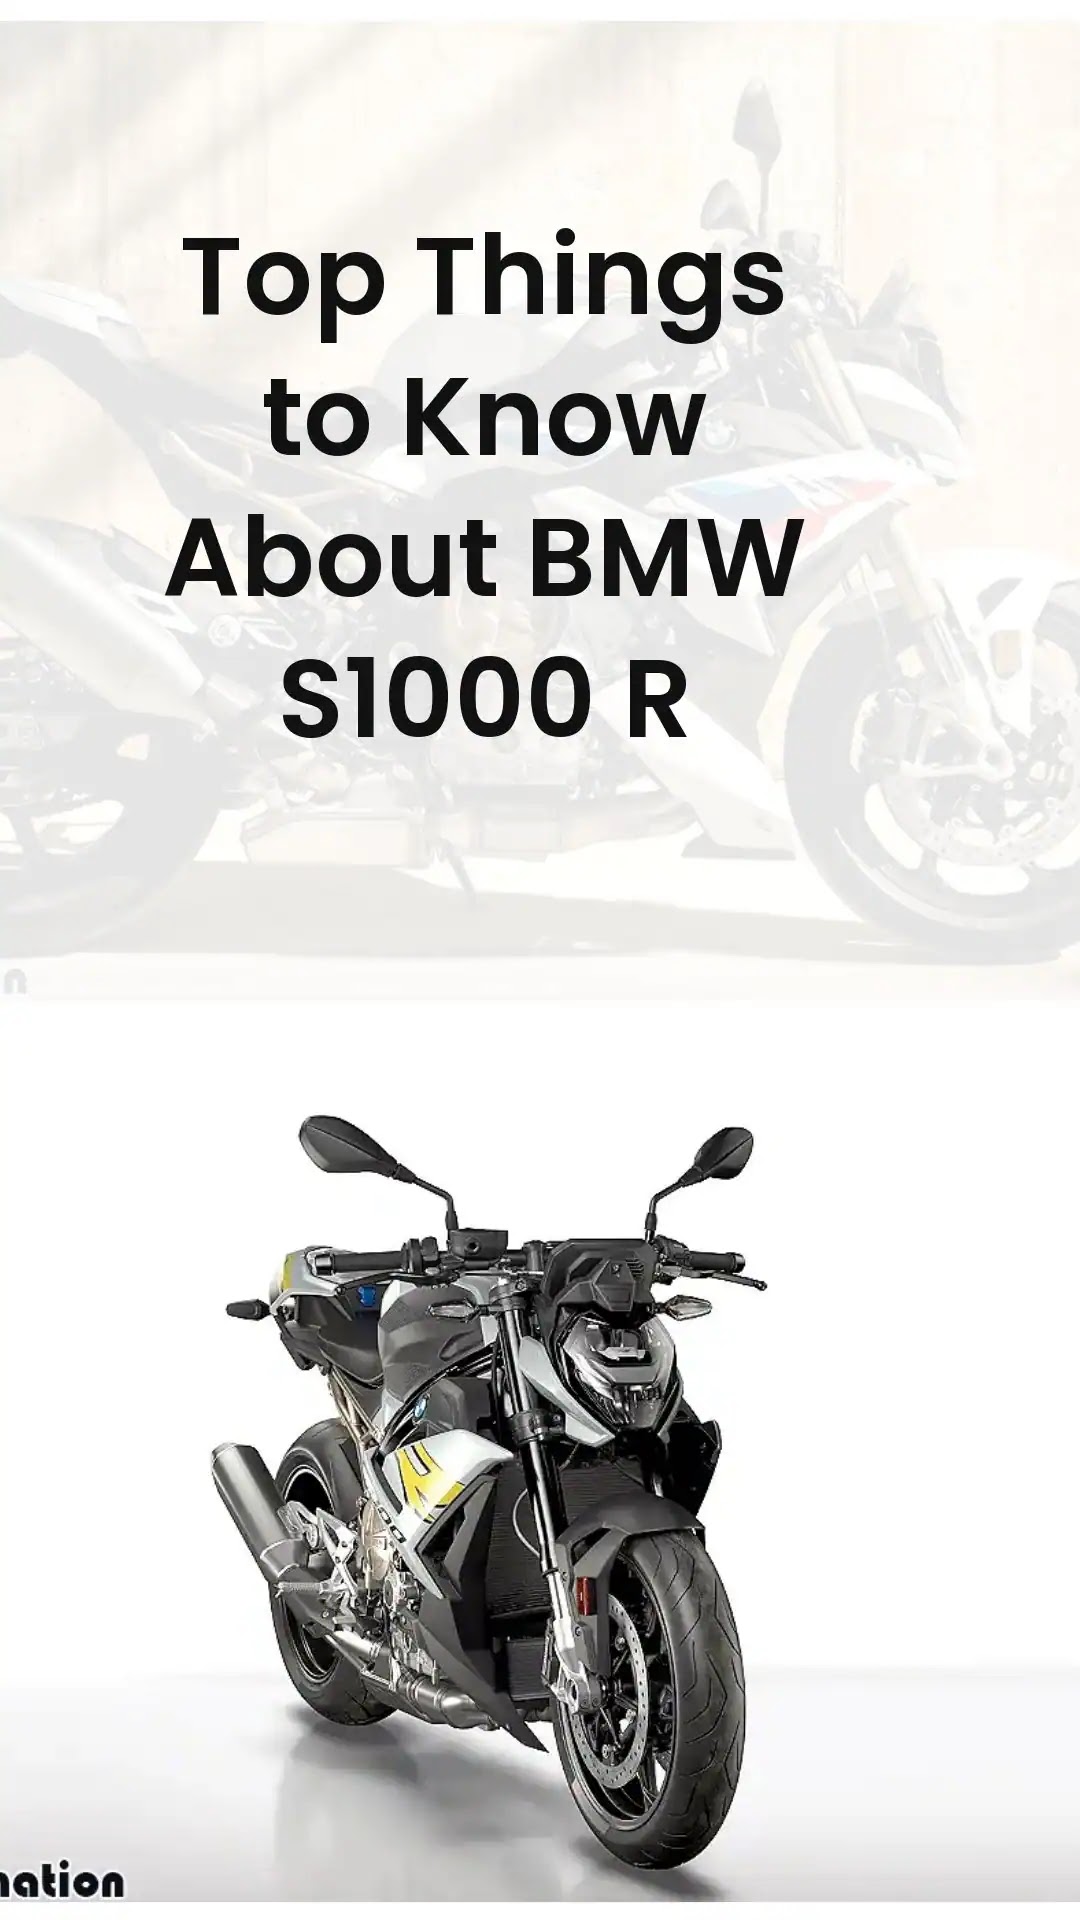 BMW S1000R